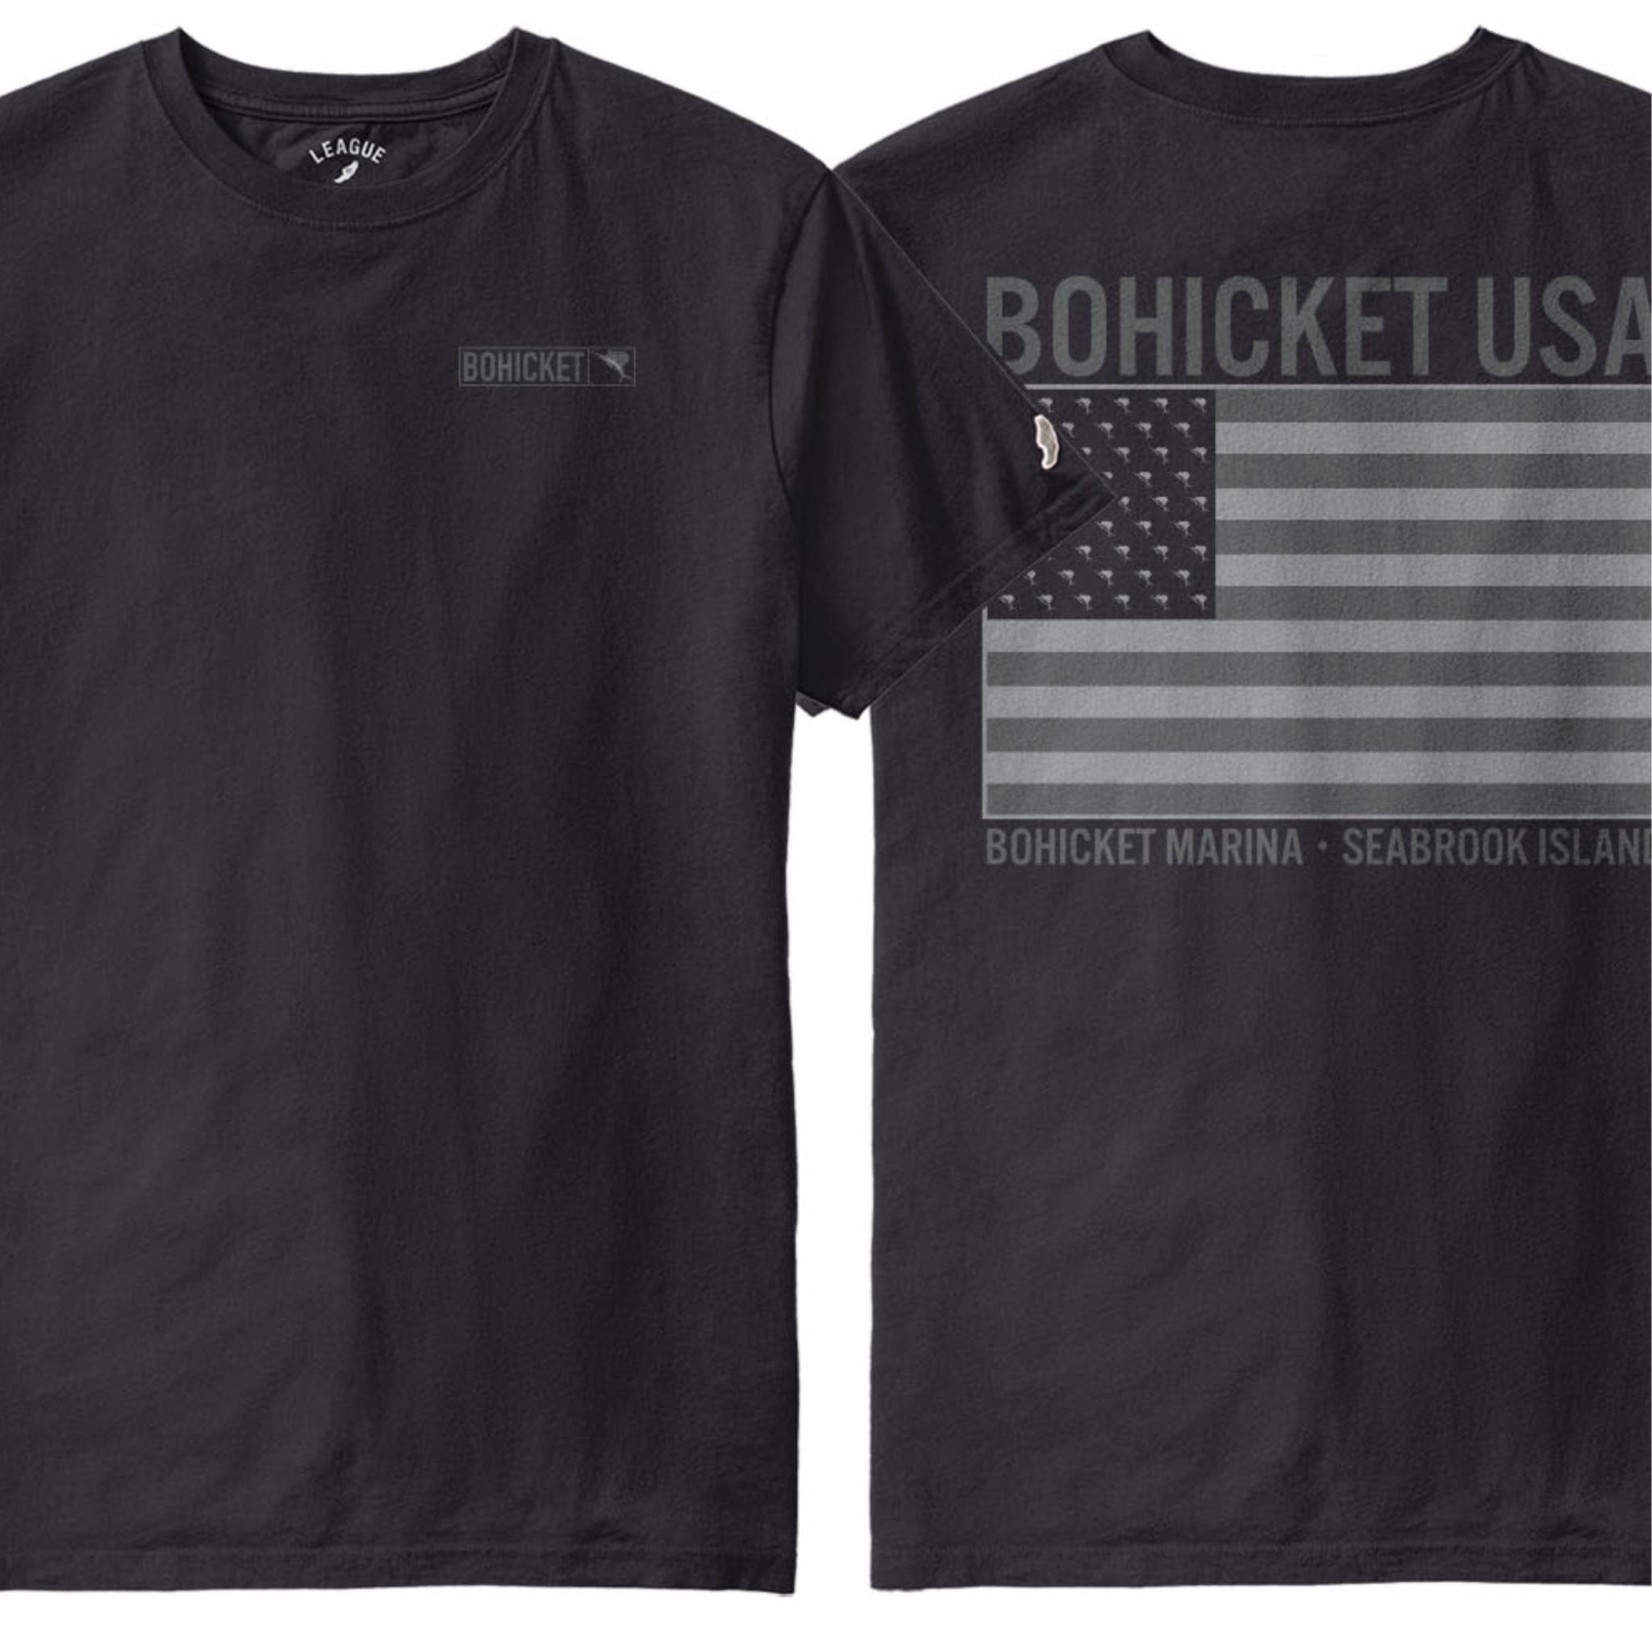 Bohicket USA S/S Vintage Black